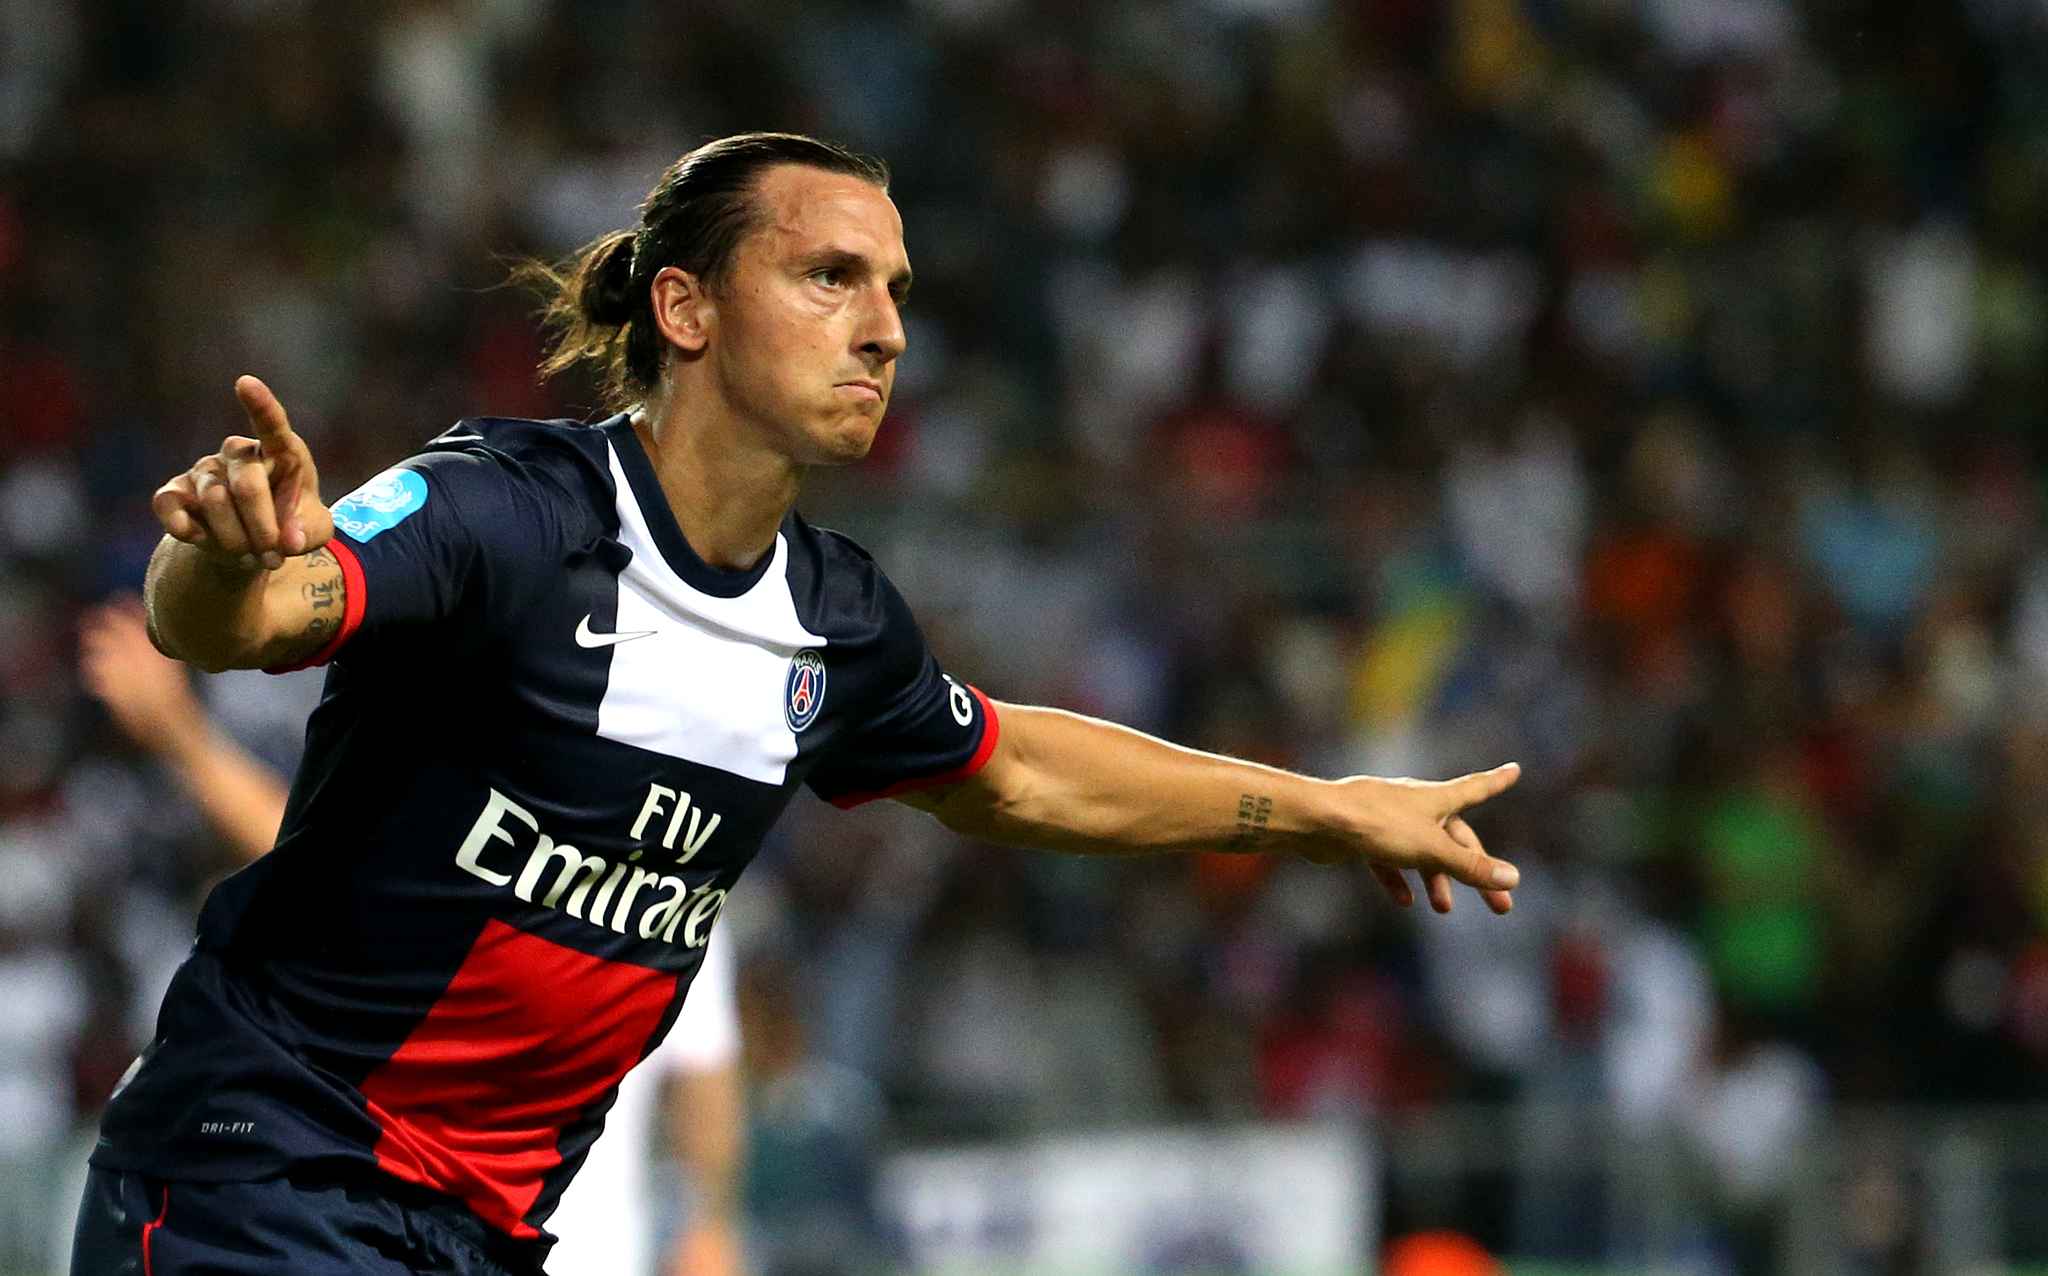 Ligue 1, Paris Saint-Germain, Zlatan Ibrahimovic